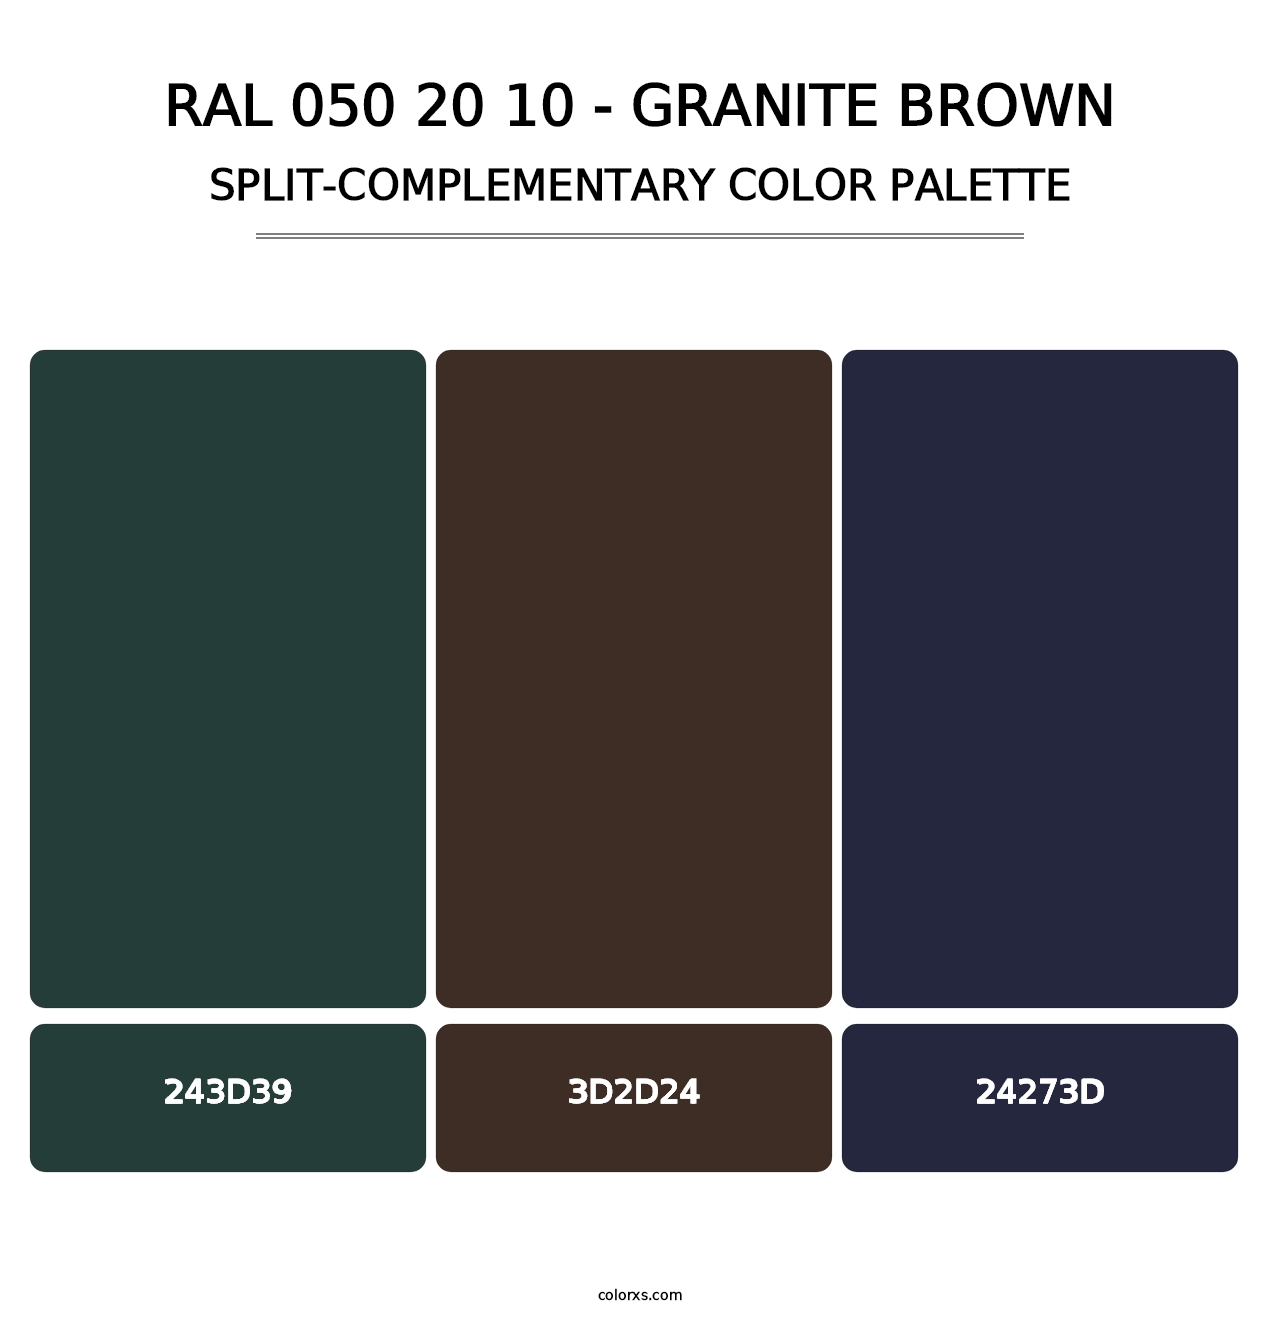 RAL 050 20 10 - Granite Brown - Split-Complementary Color Palette